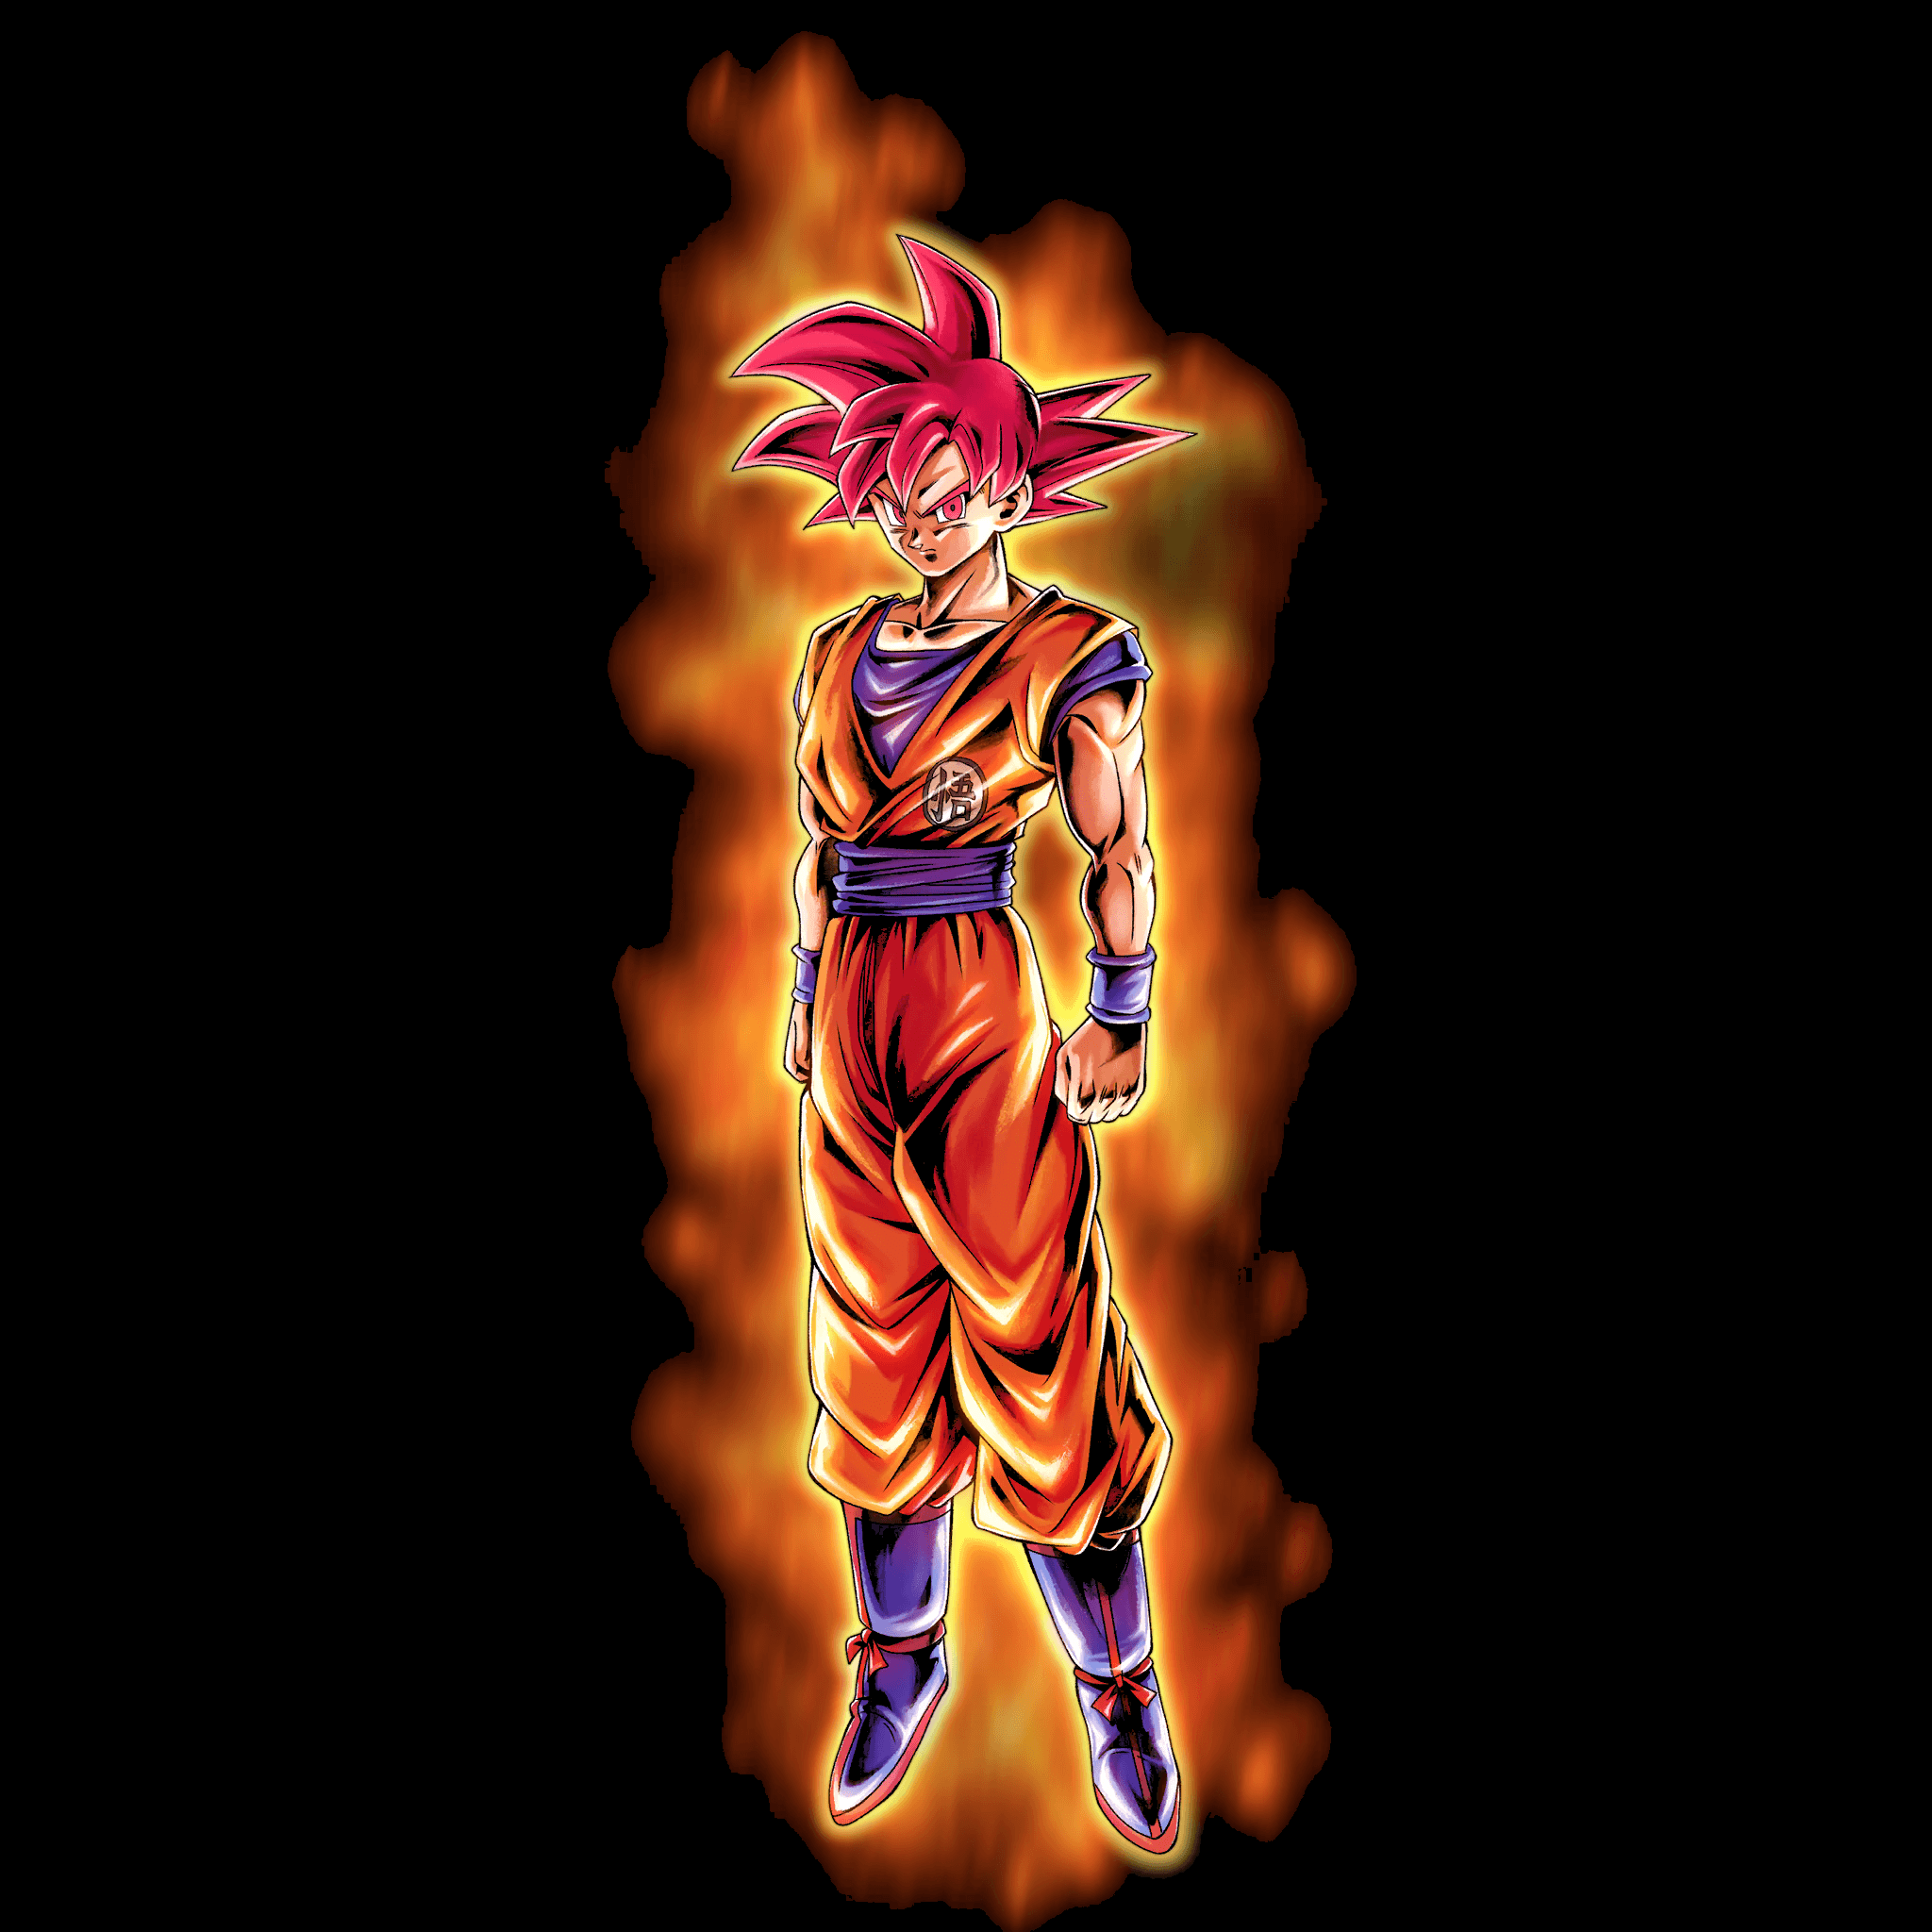 Wallpaper Goku Super Saiyan God